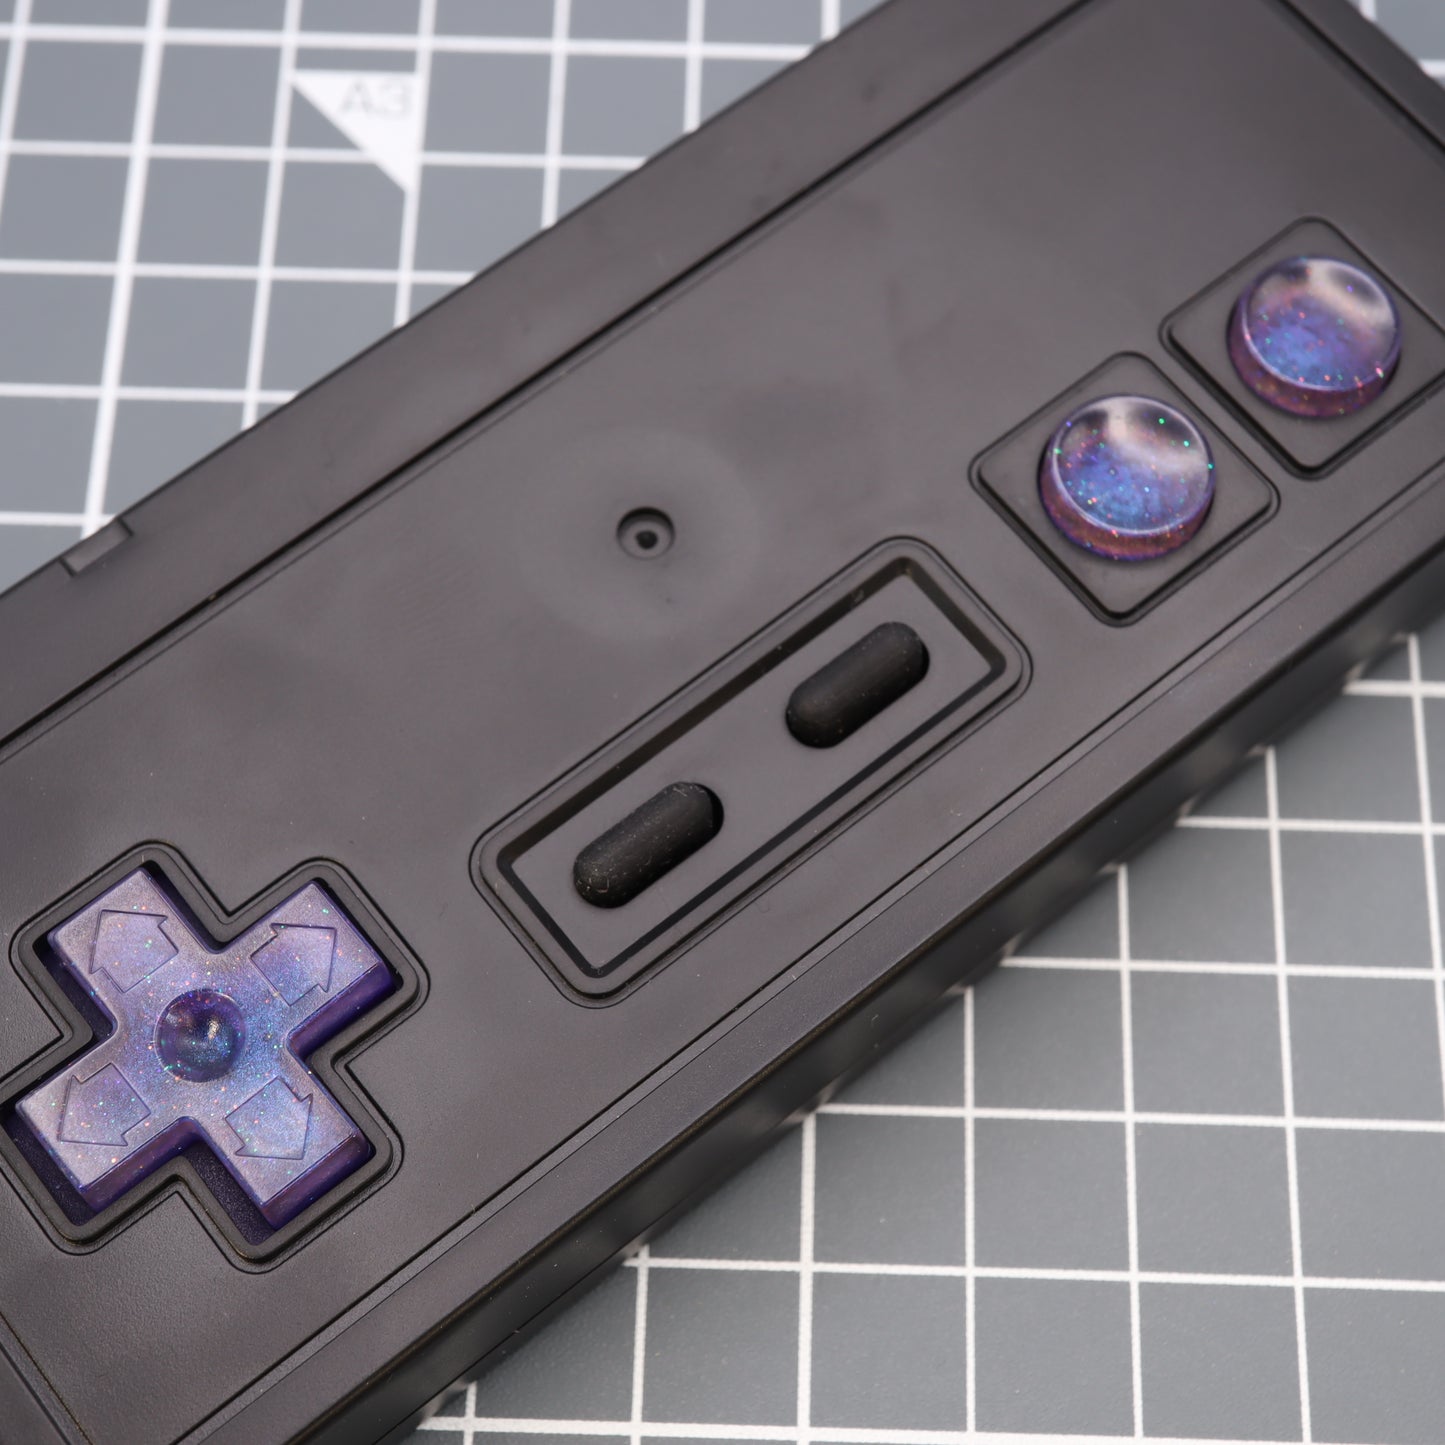 Nintendo NES - Custom Button - Cosmic Purple